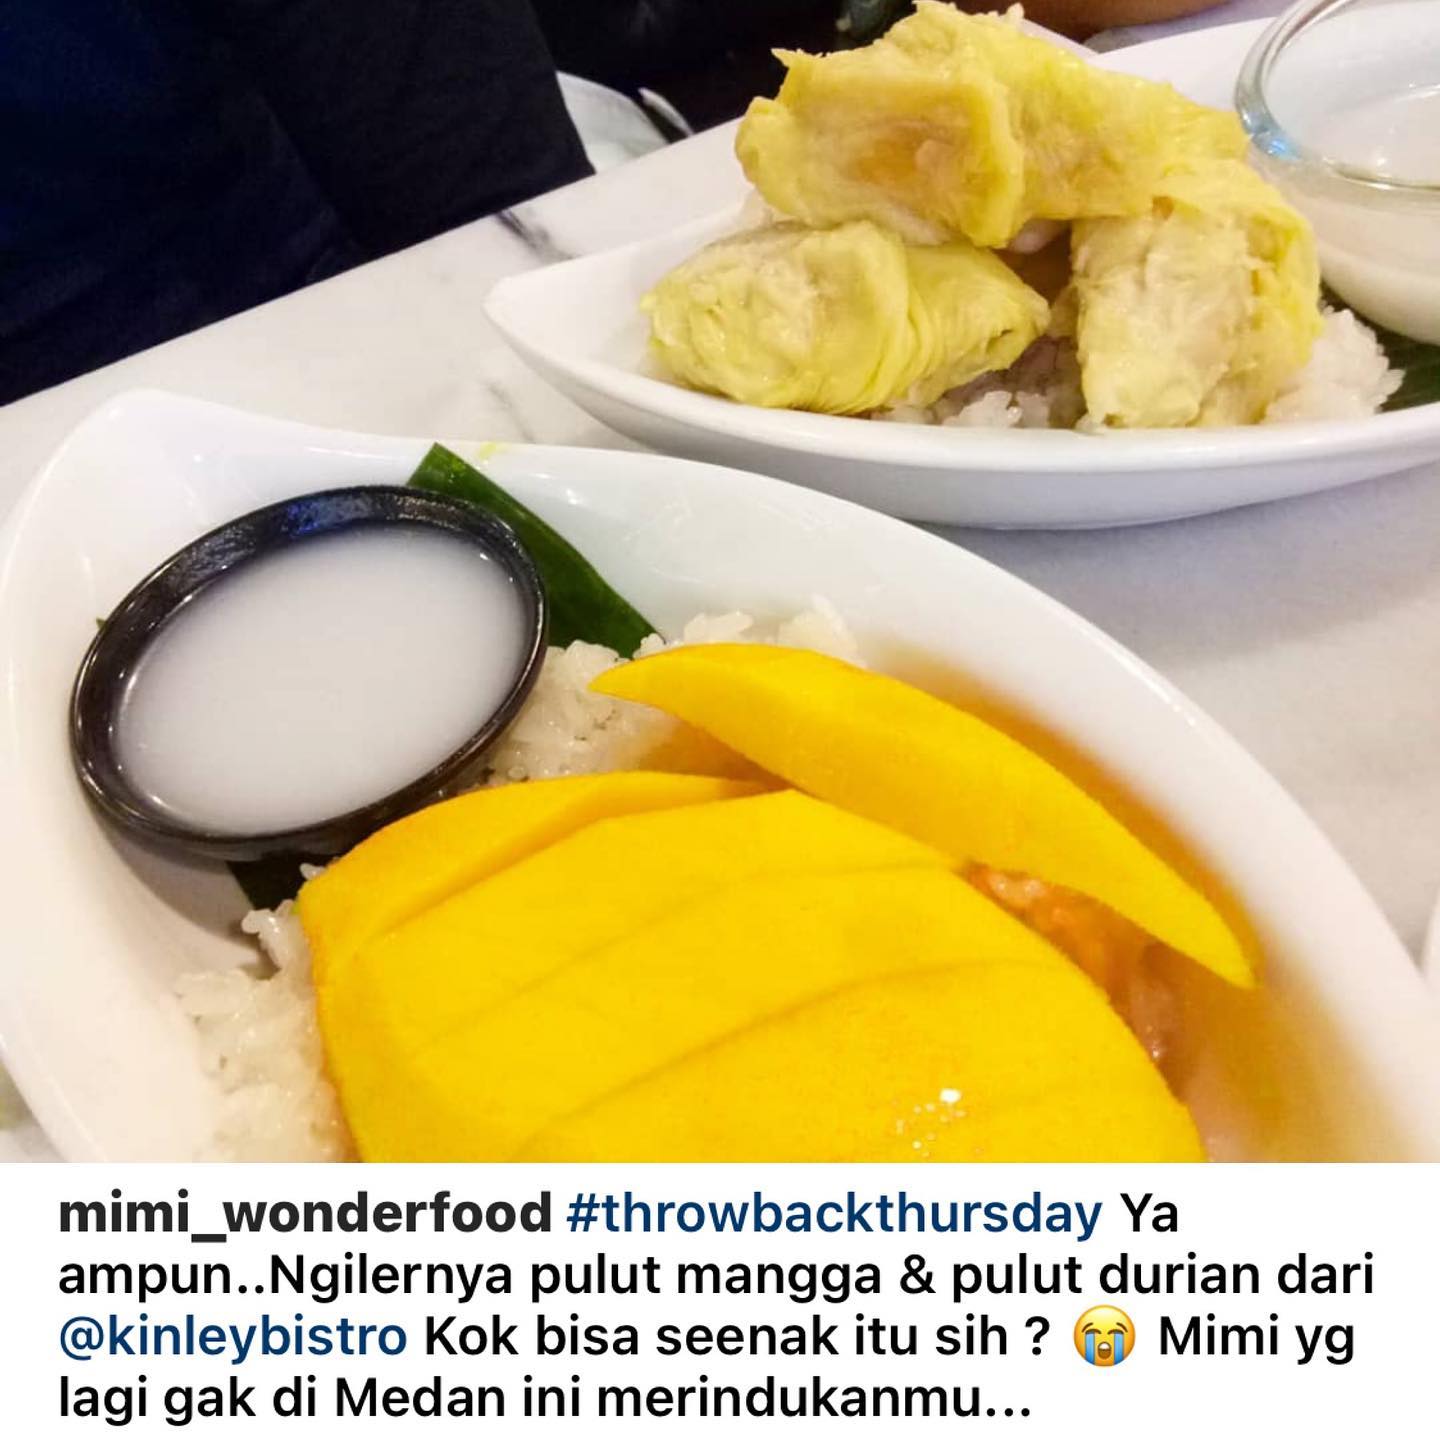 Siapa ngidem pulut mangga dan pulut durian Kinley?

Yuk!
Thank you so much for your kindest review @mimi_wonderfood 🥰🥰